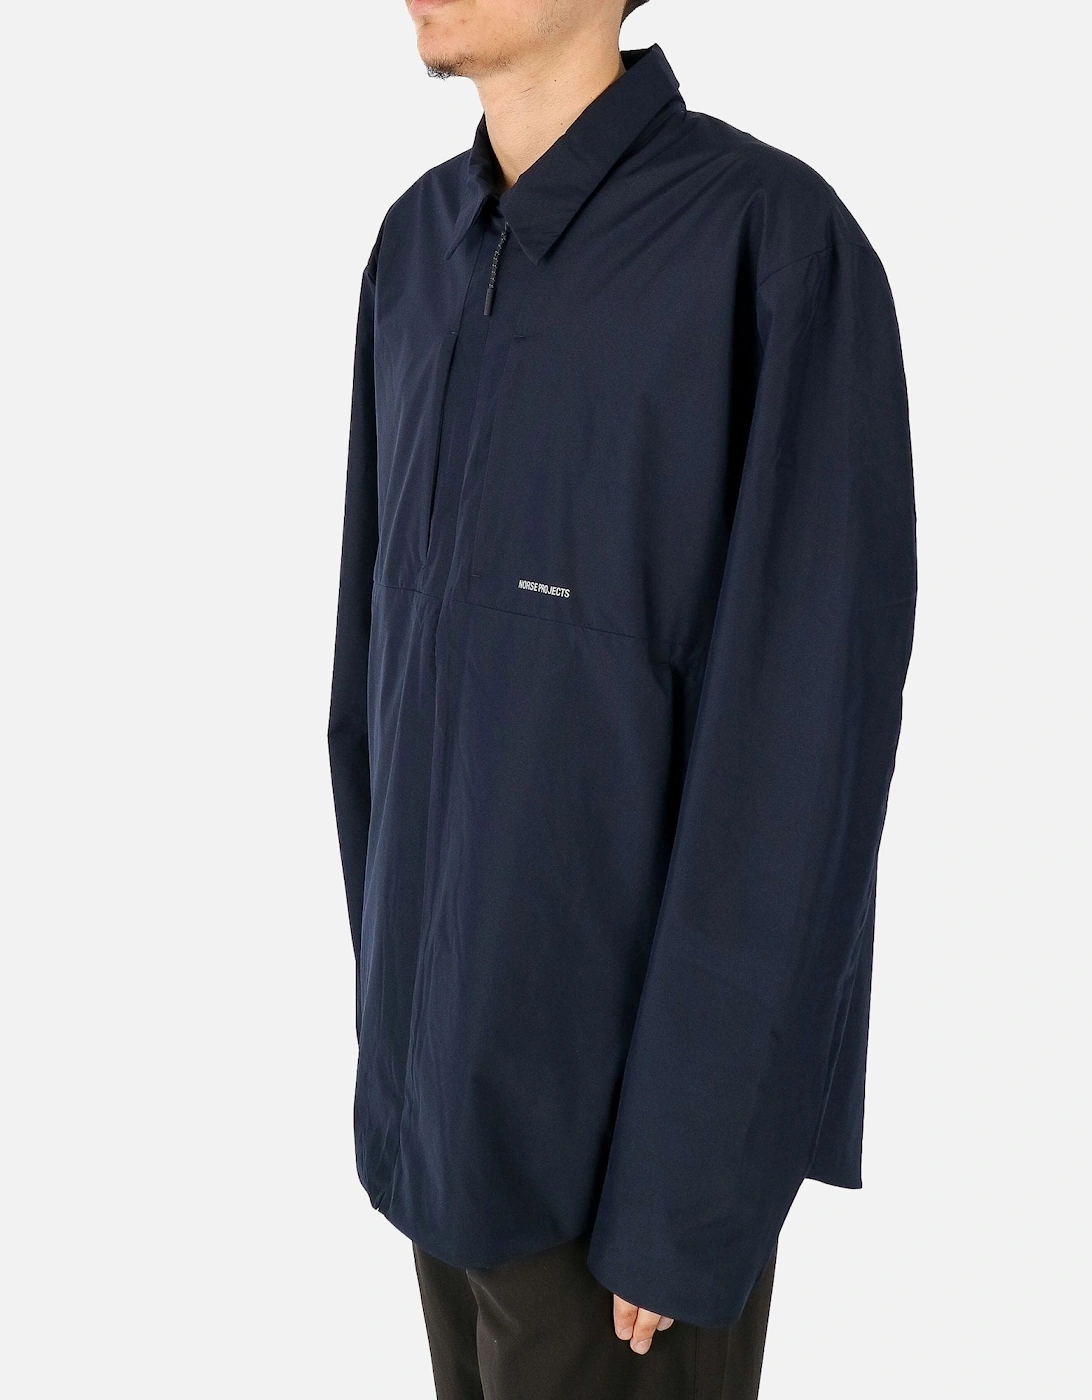 Jens Gore-Tex Navy Shirt Jacket